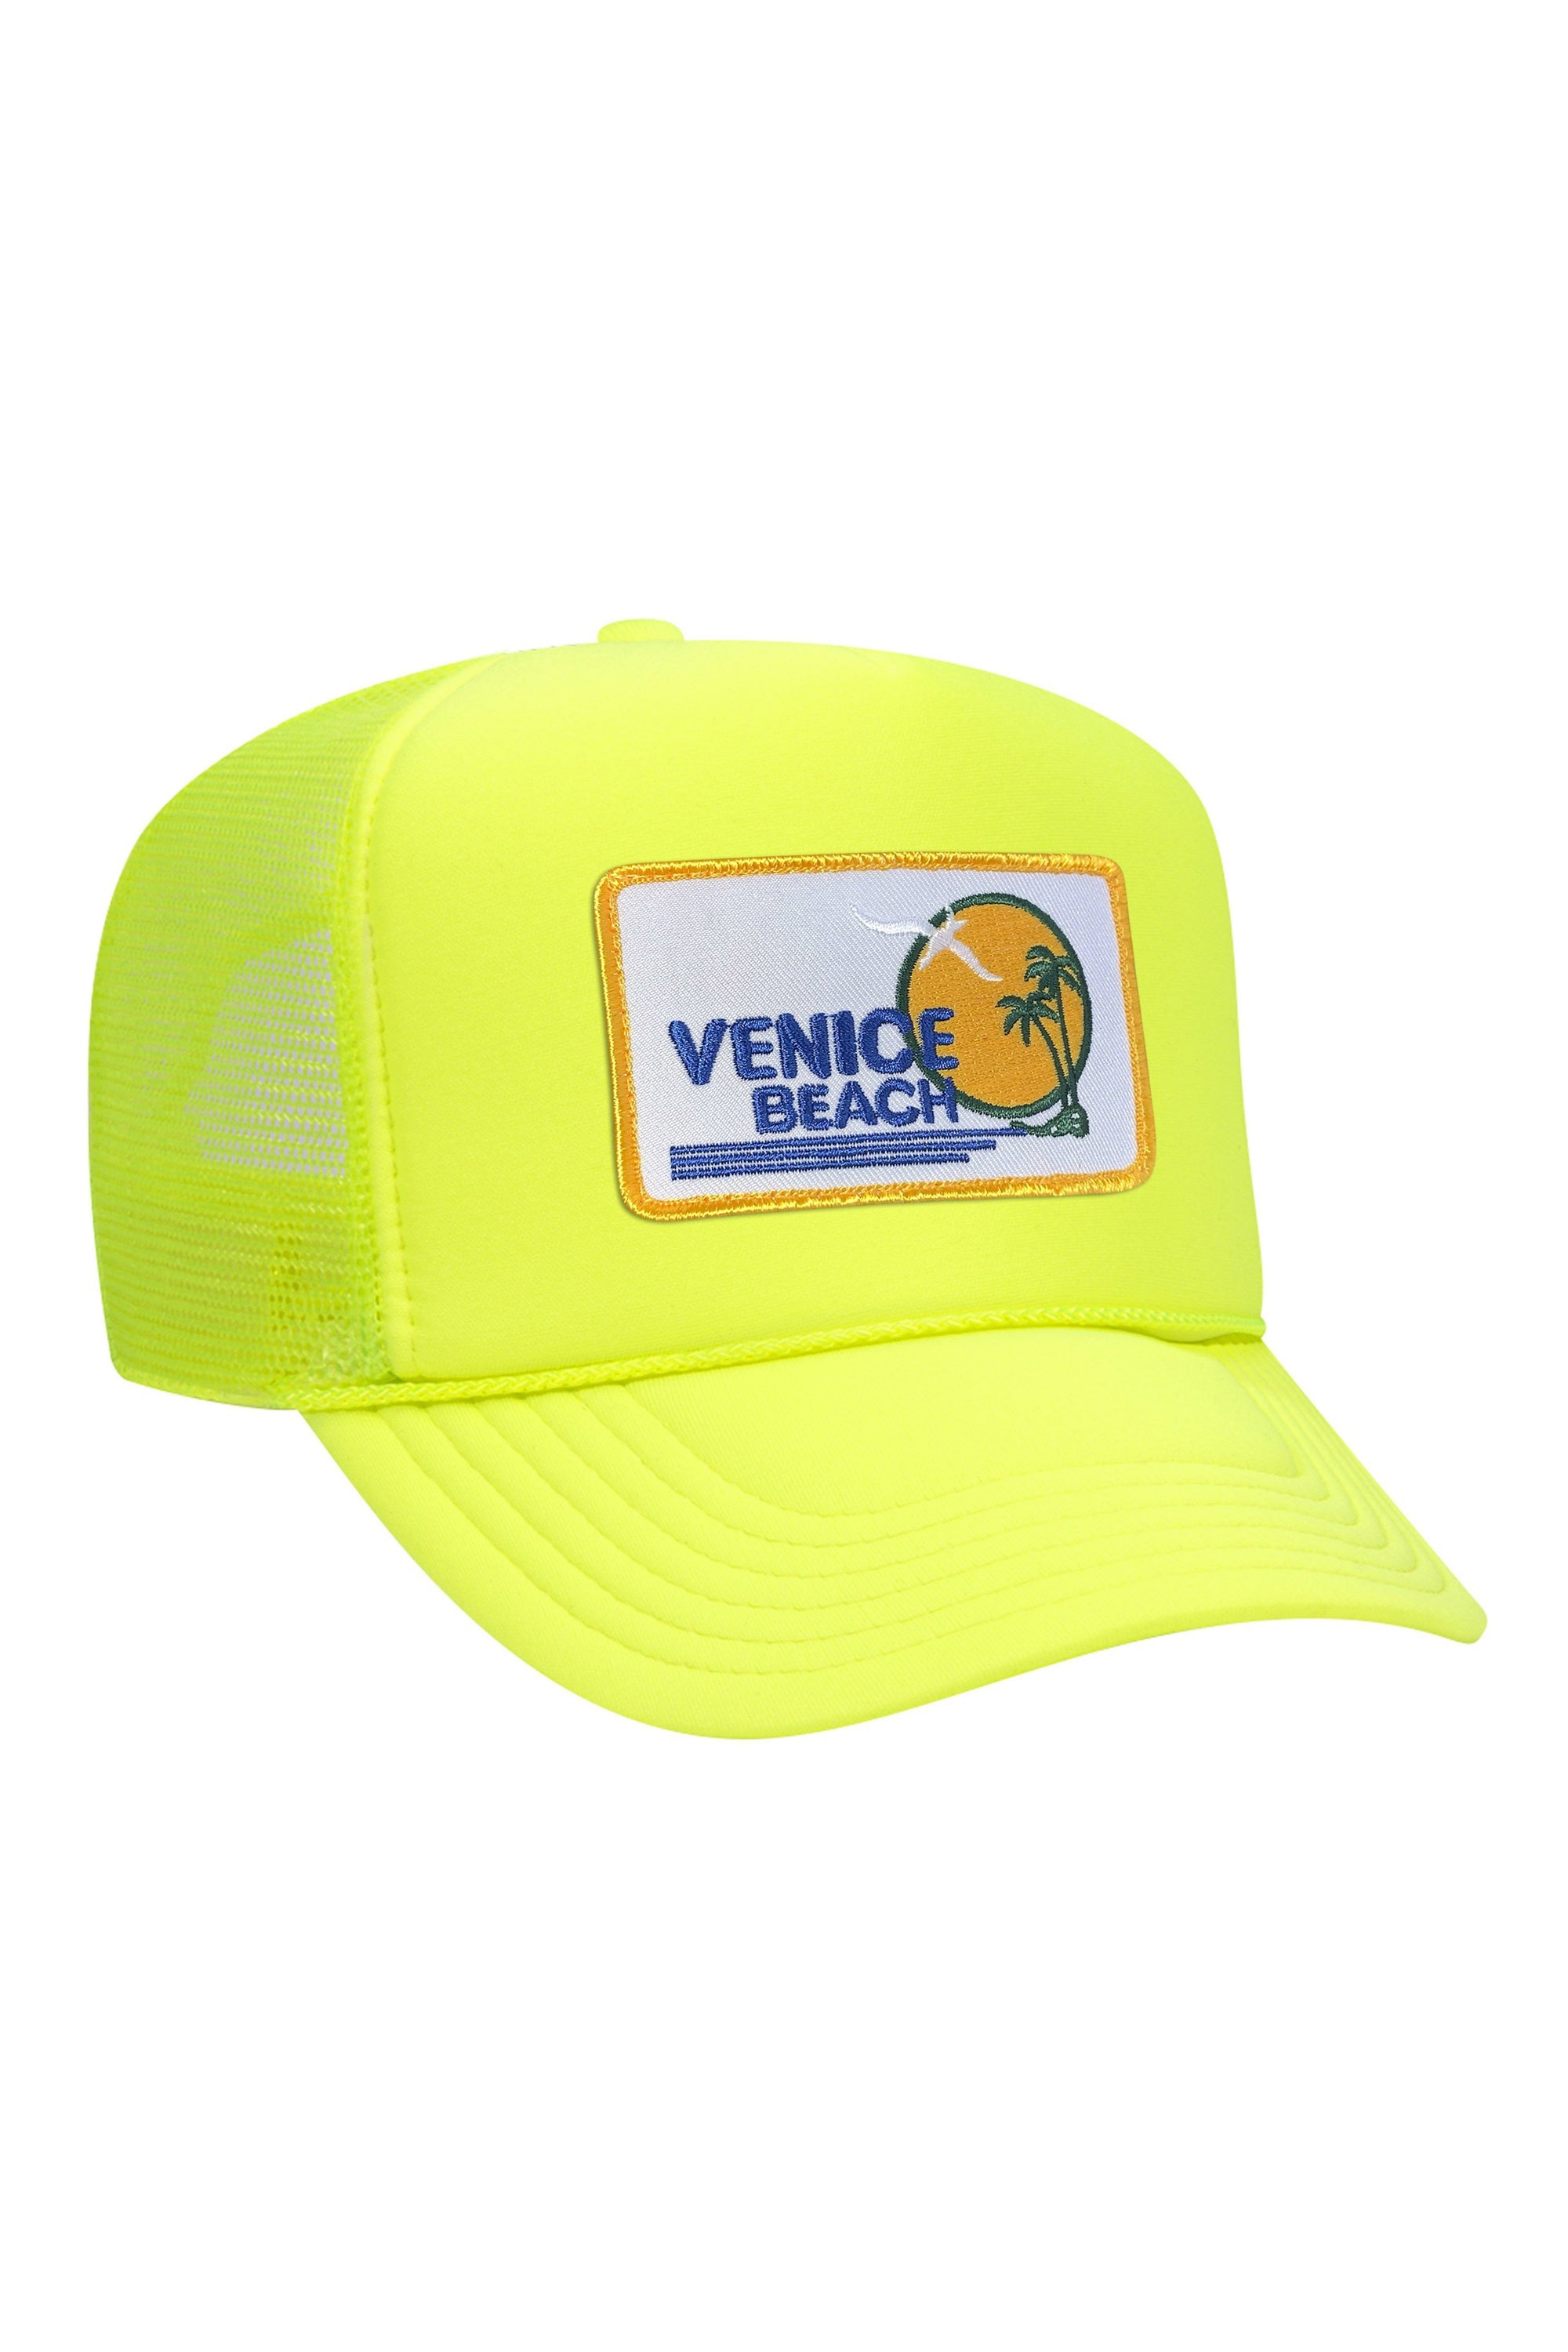 VENICE BEACH VINTAGE TRUCKER HAT HATS Aviator Nation OS NEON PINK // WHITE // NEON PINK 